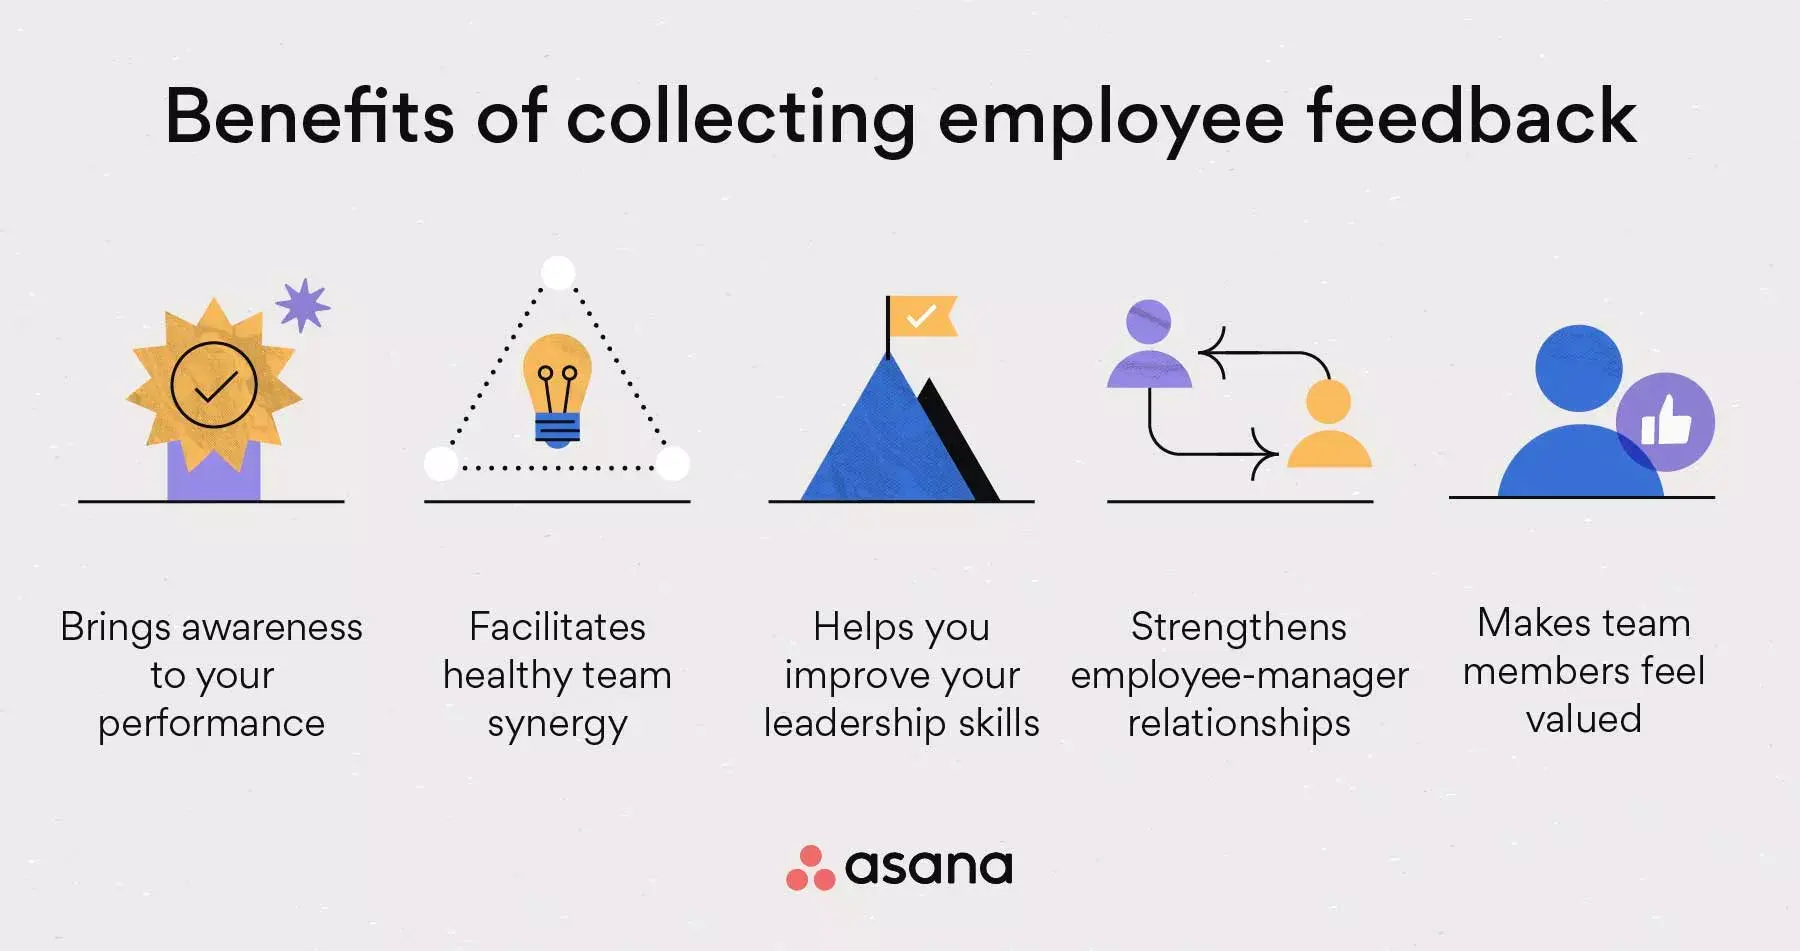 [inline illustration] Benefits of collecting employee feedback (infographic)